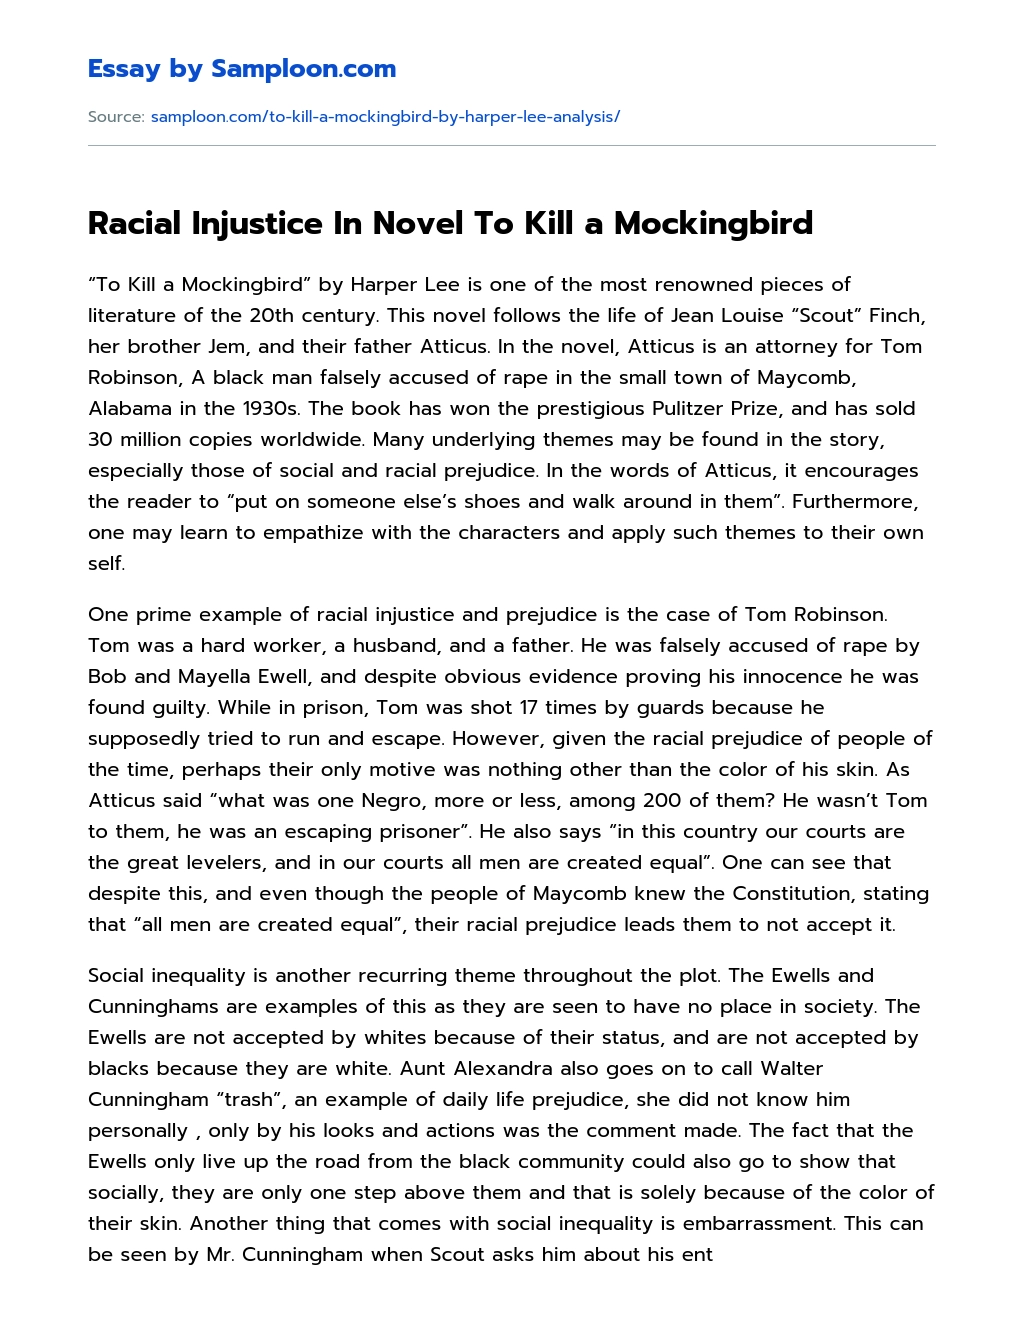 Racial Injustice In Novel To Kill a Mockingbird essay